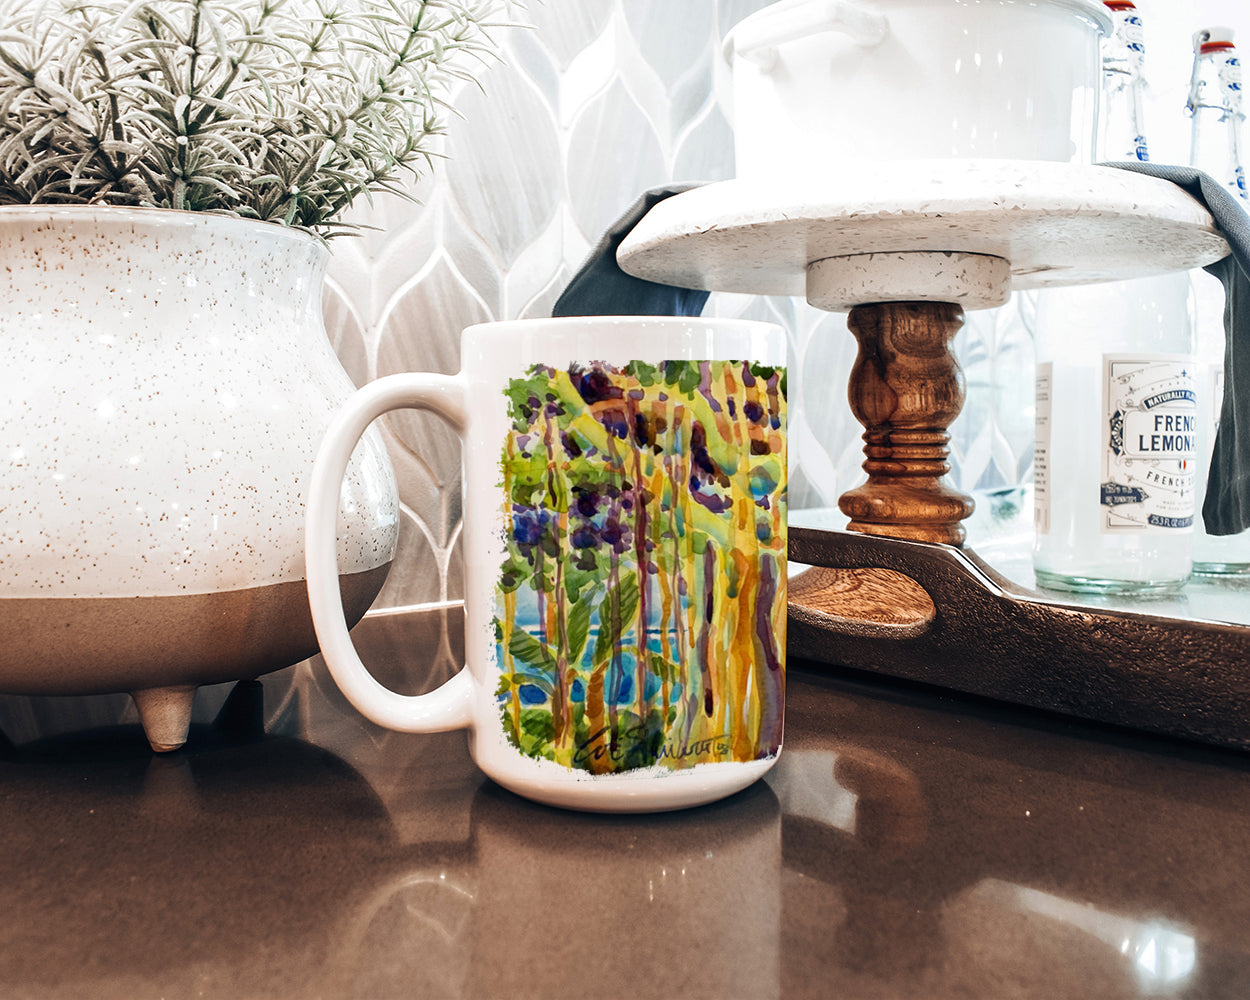 Tree - Banyan Tree Dishwasher Safe Microwavable Ceramic Coffee Mug 15 ounce 6064CM15